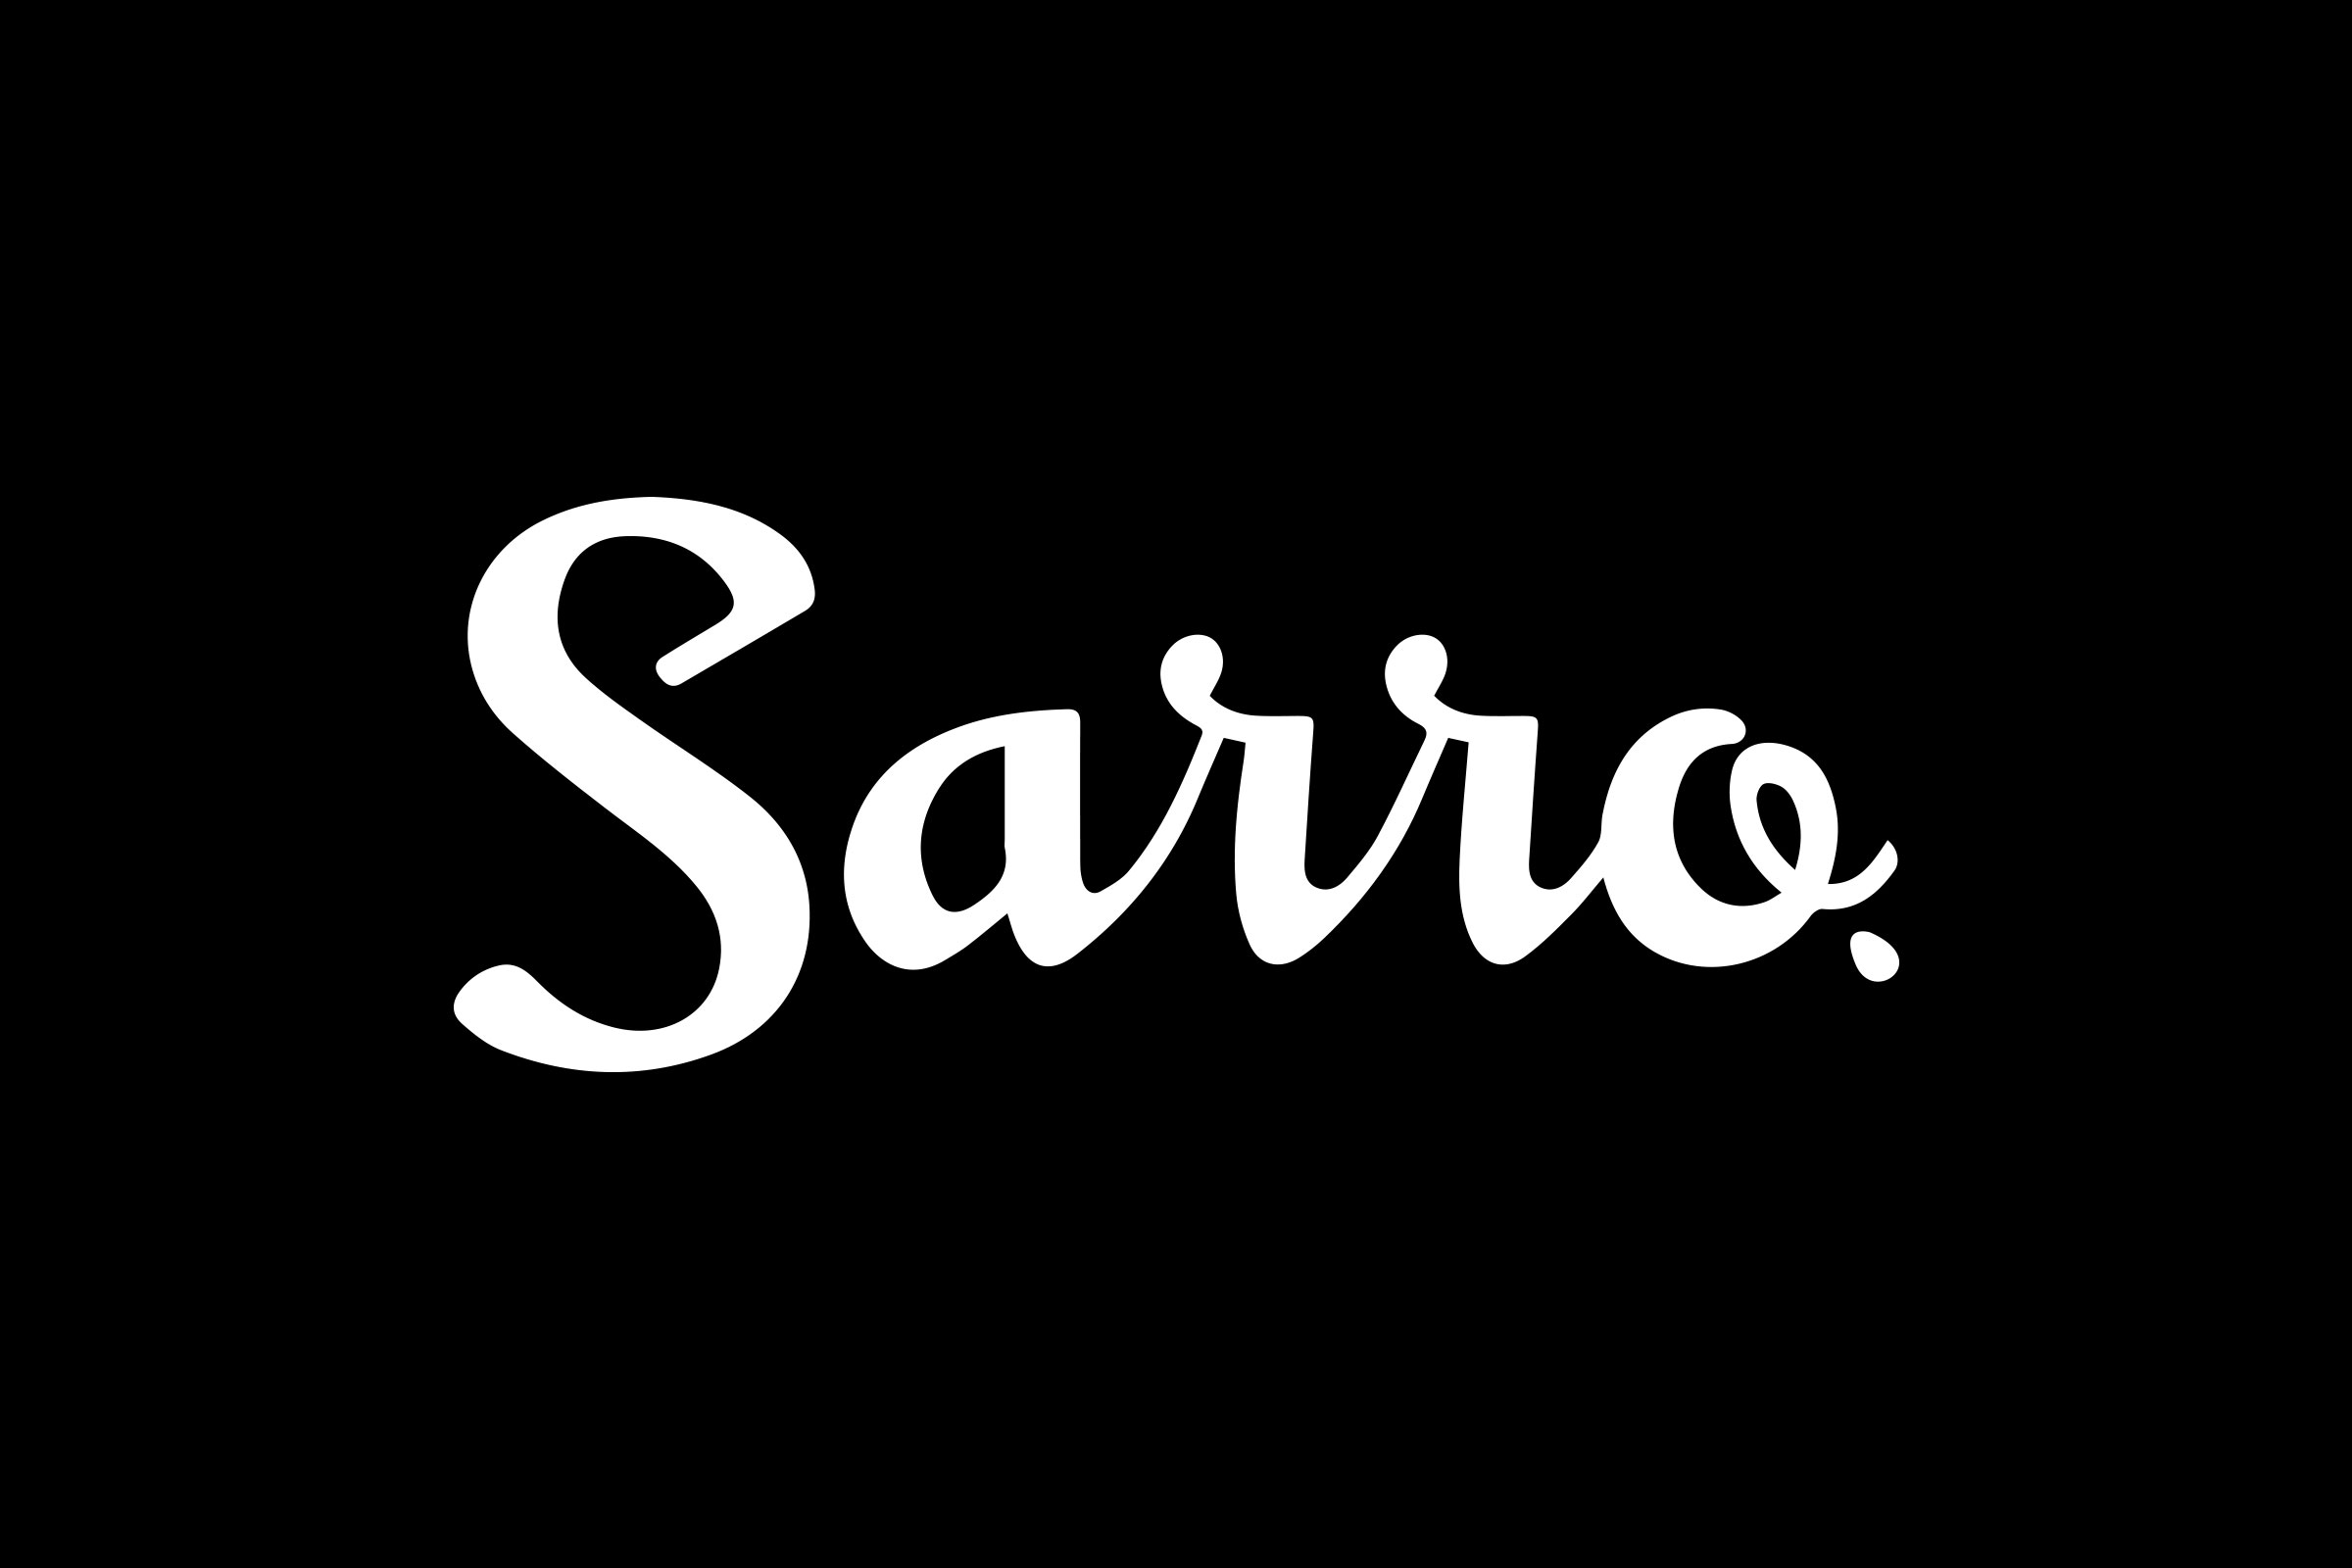 Sarro09